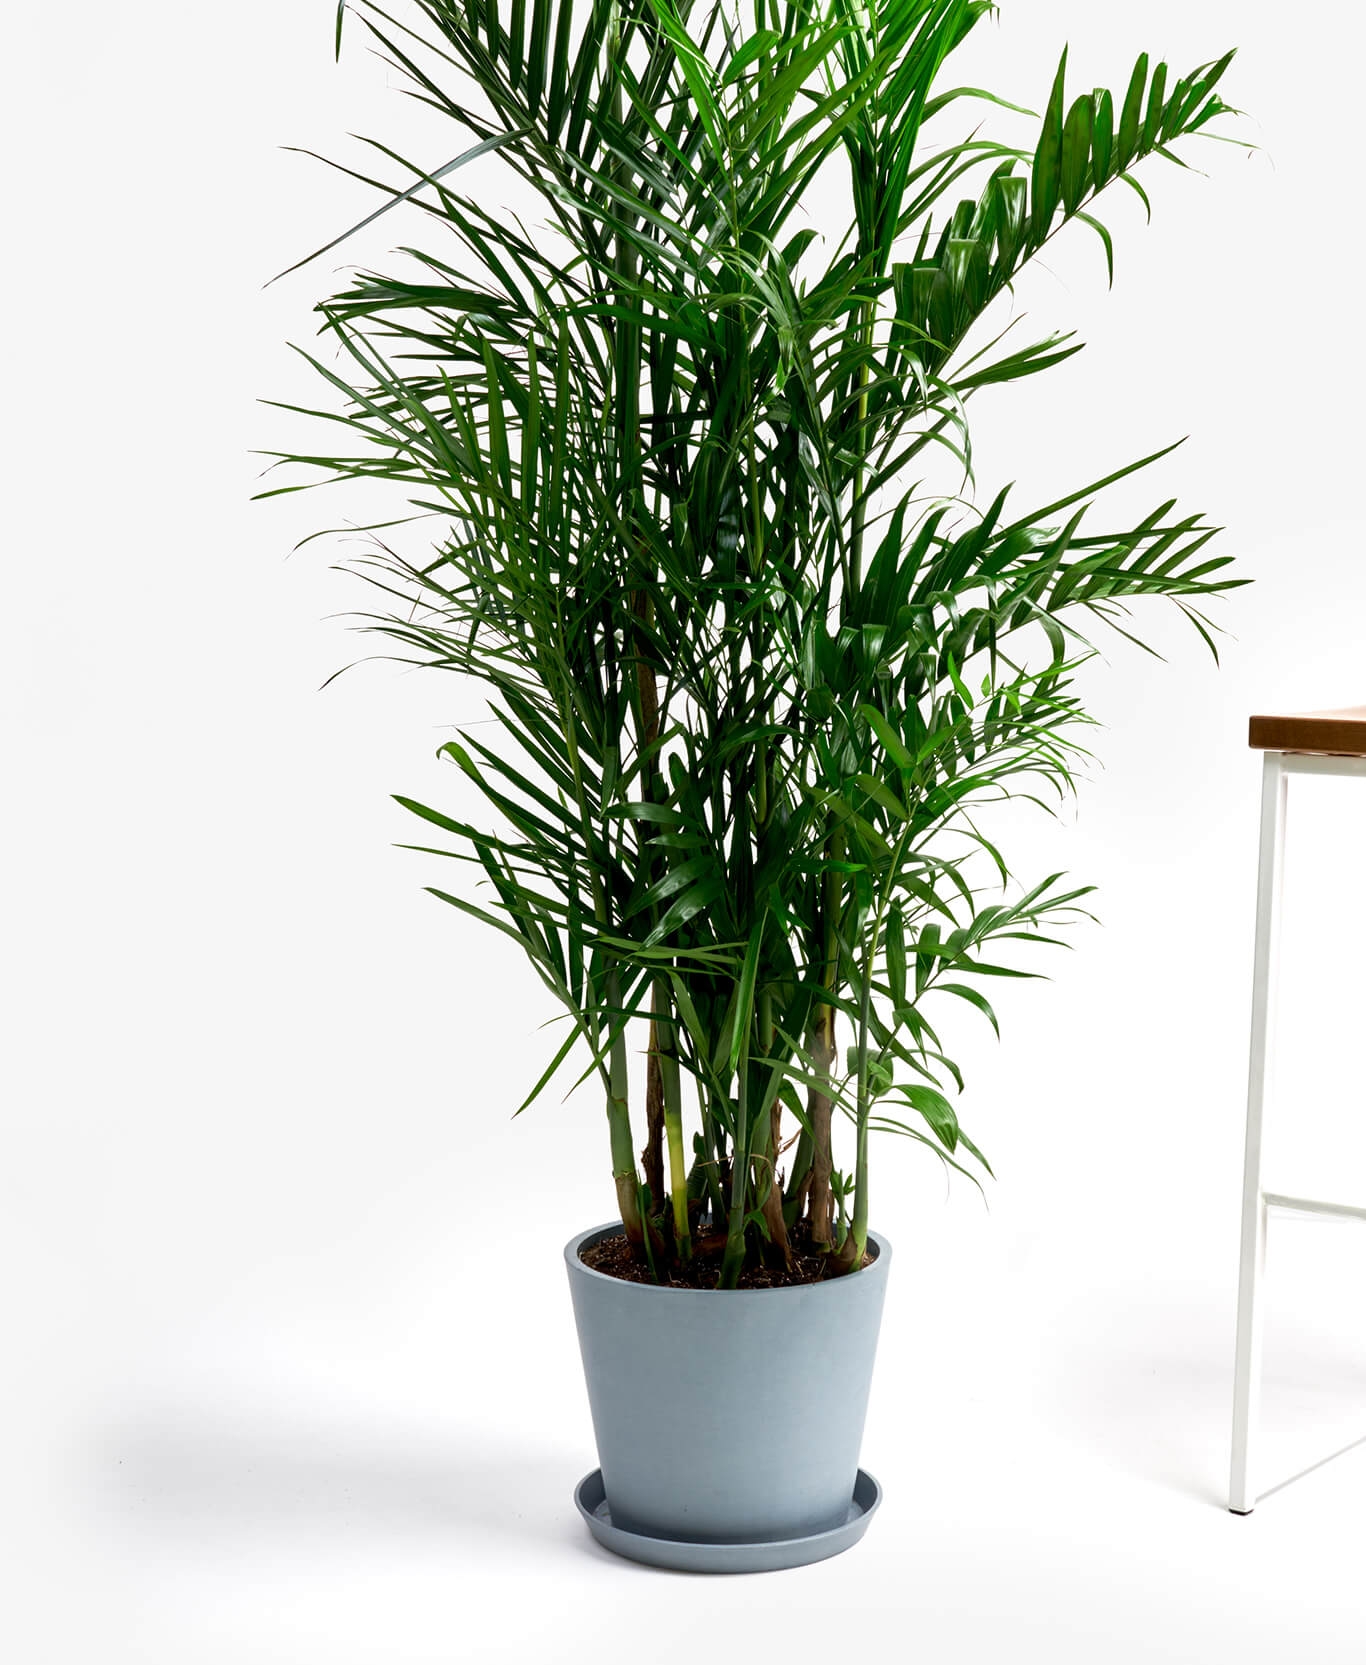 Bamboo Palm - Image 0